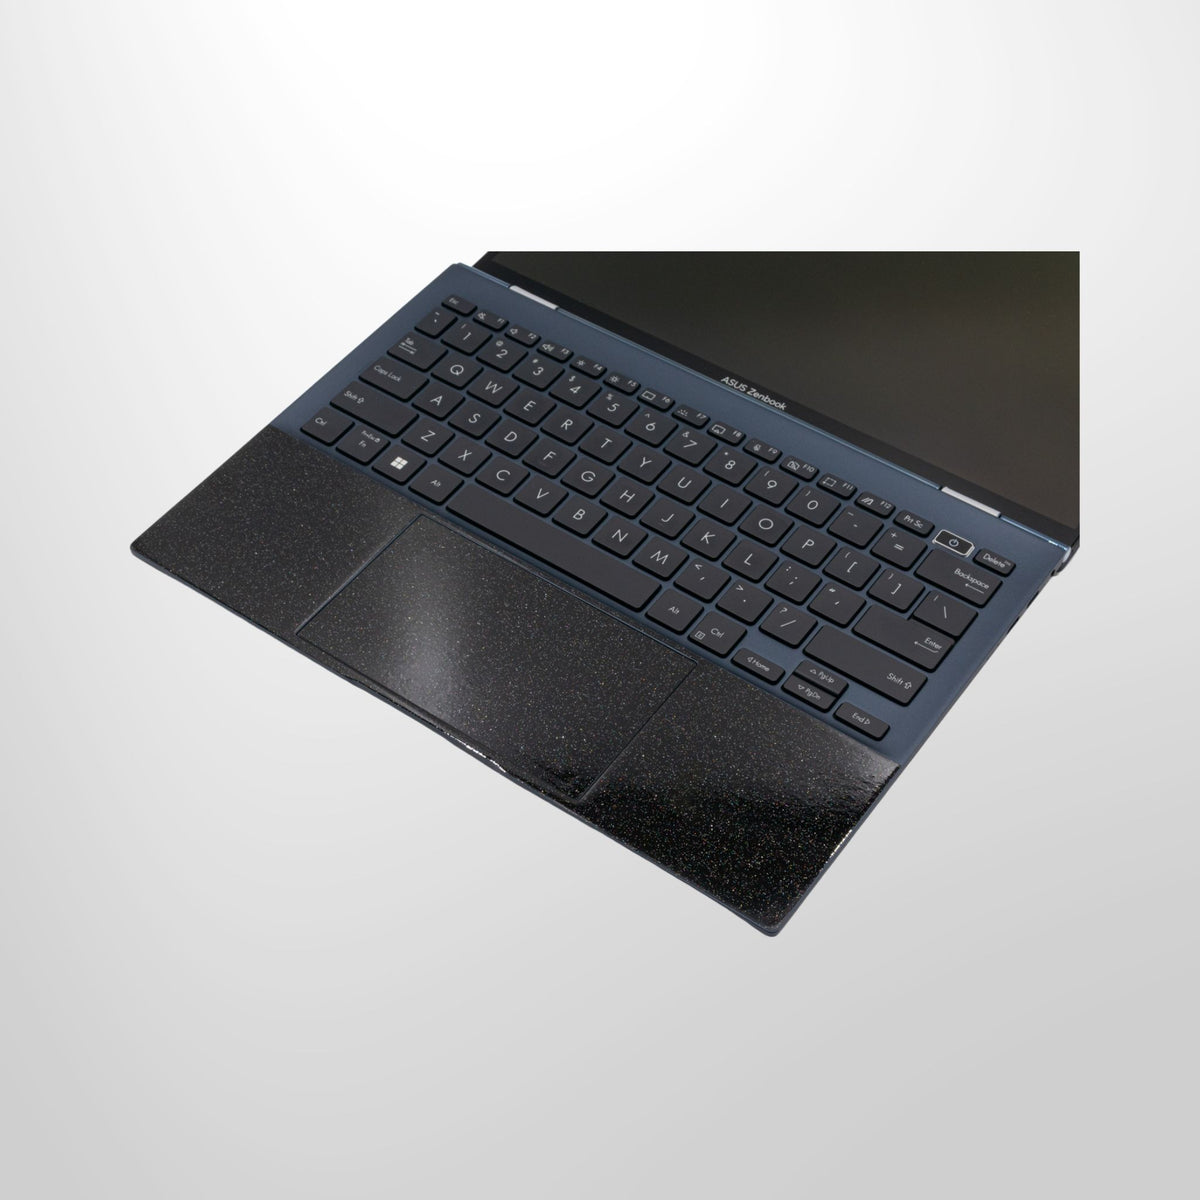 Asus ZenBook S 13 OLED (2022) Skins